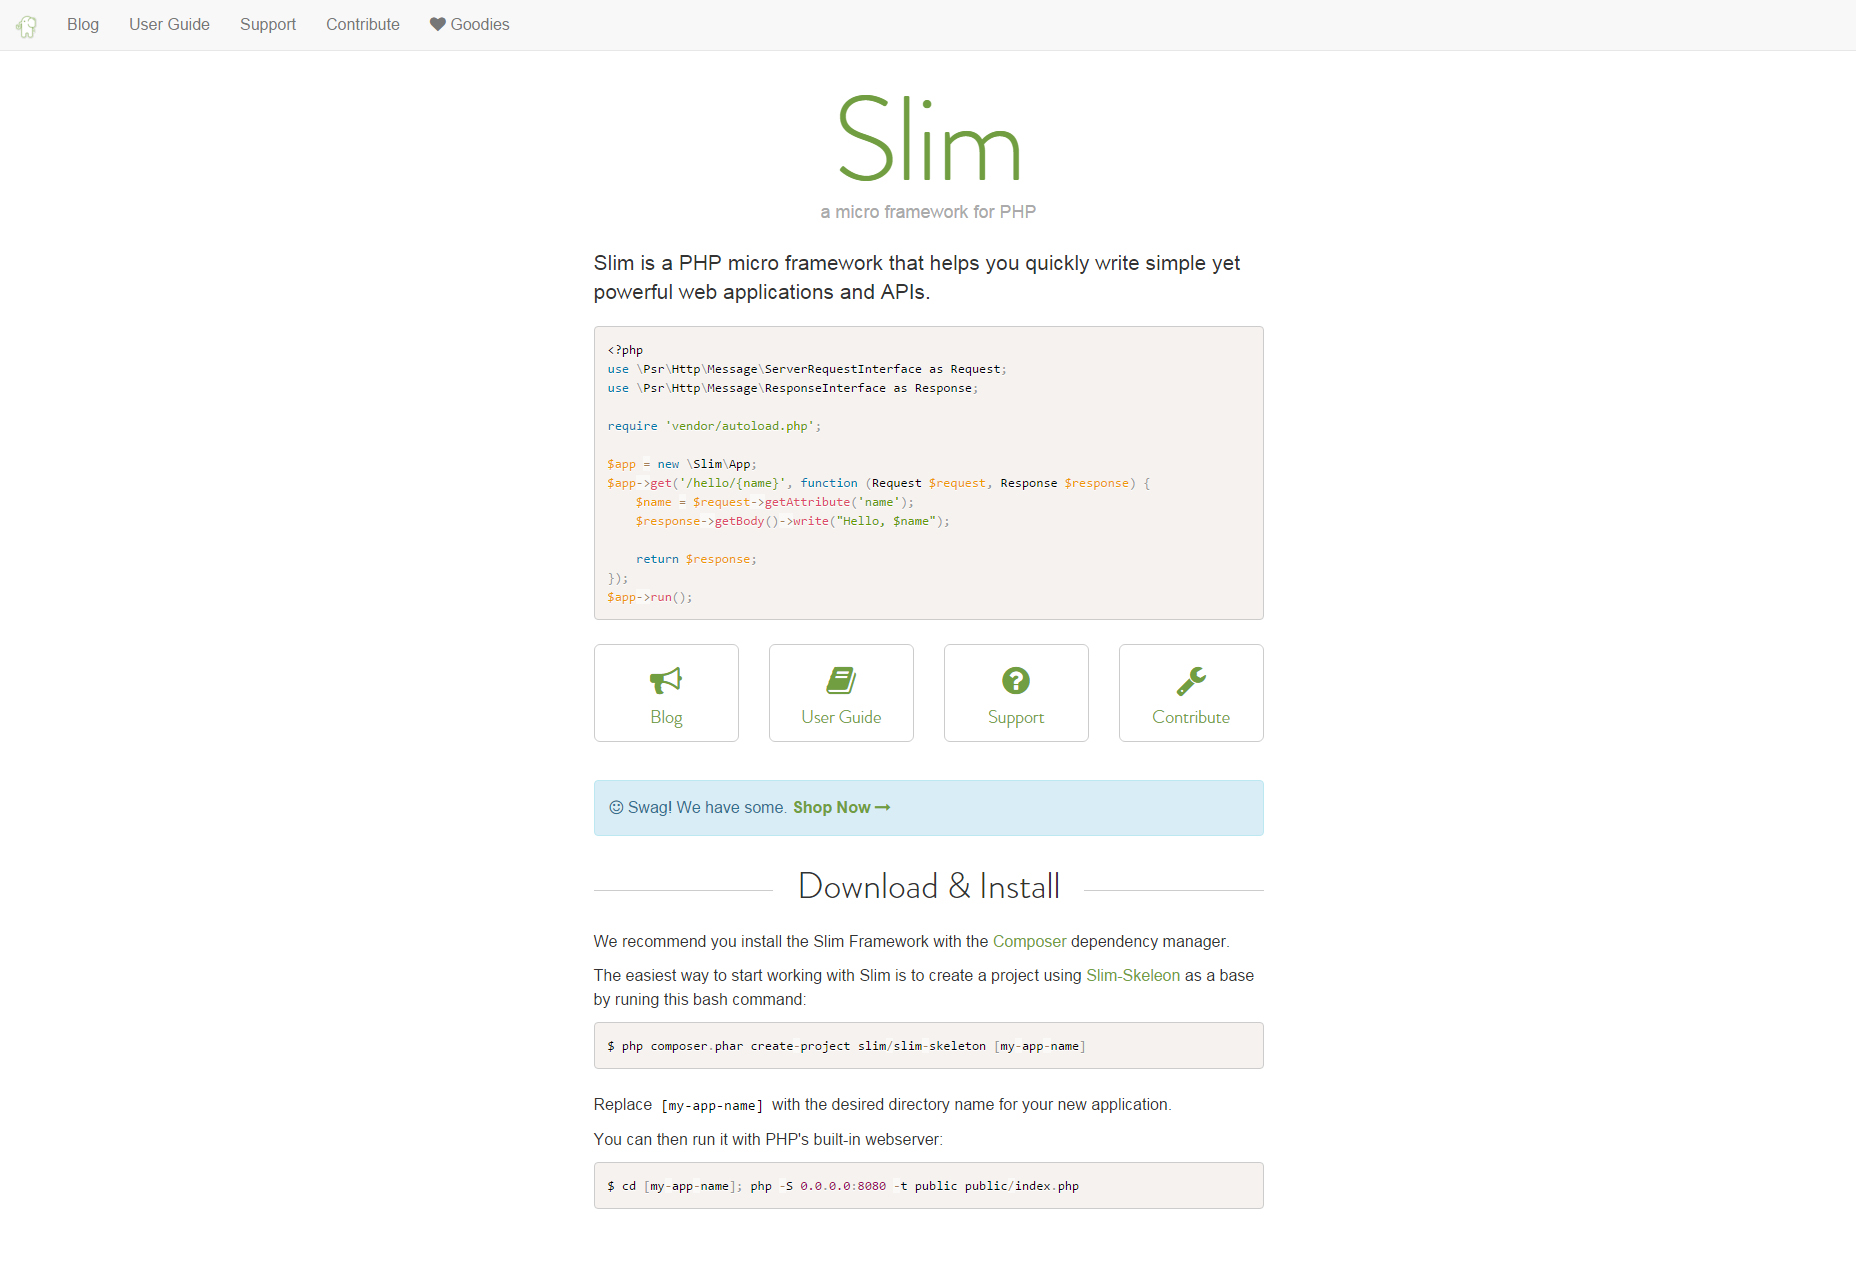 slim-php-micro-framework